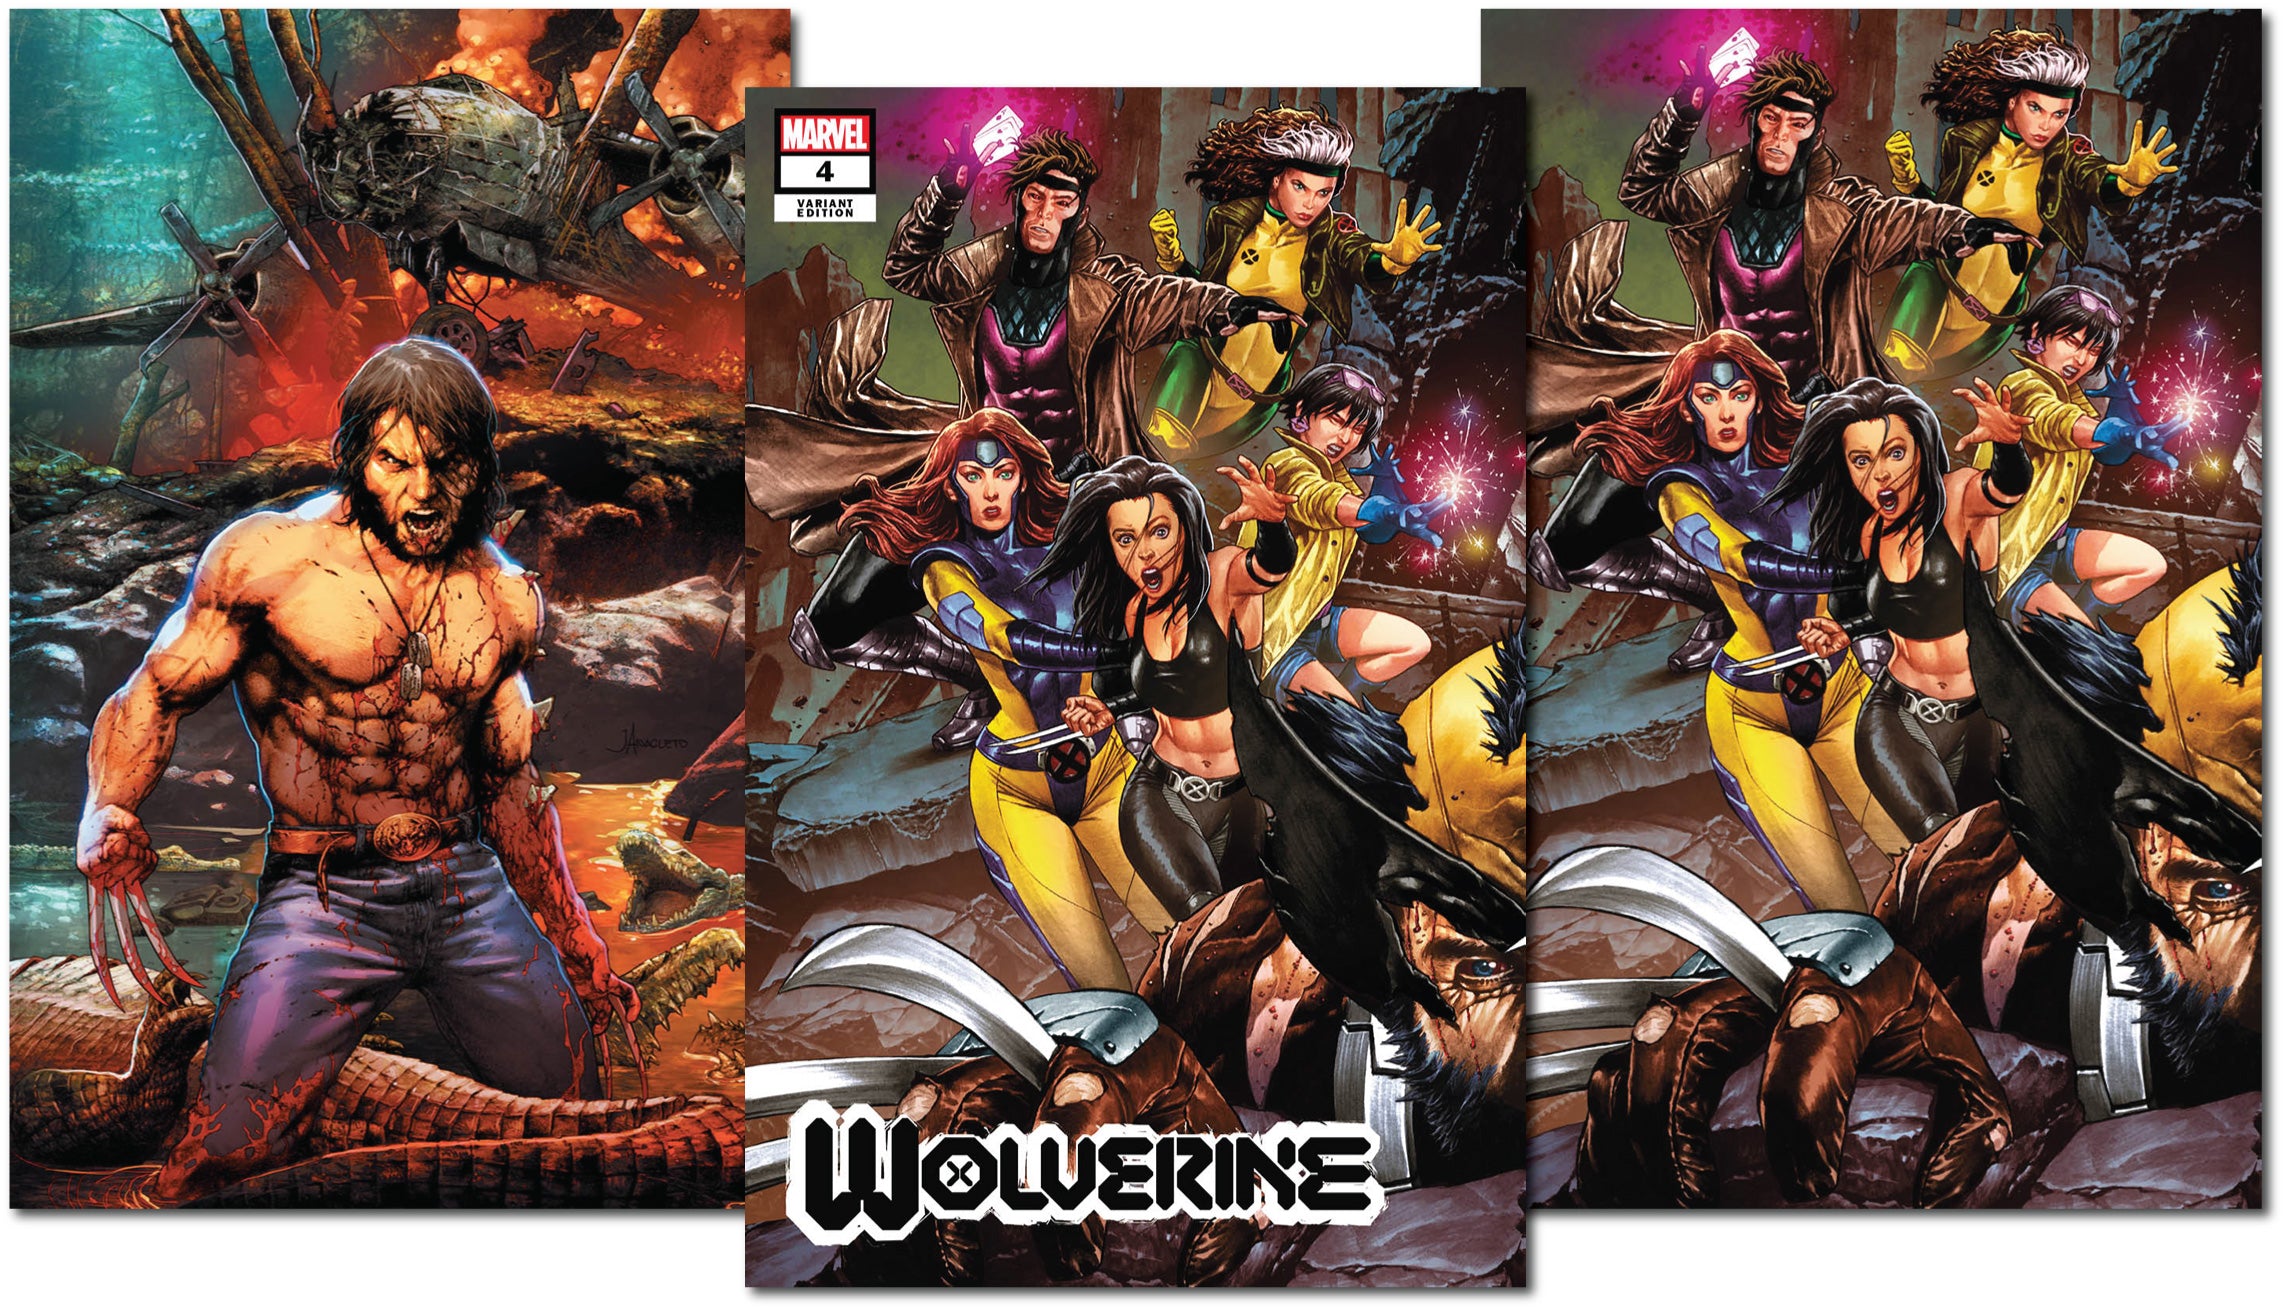 WOLVERINE #4 UNKNOWN COMICS EXCLUSIVE VAR 3 PACK (08/19/2020)